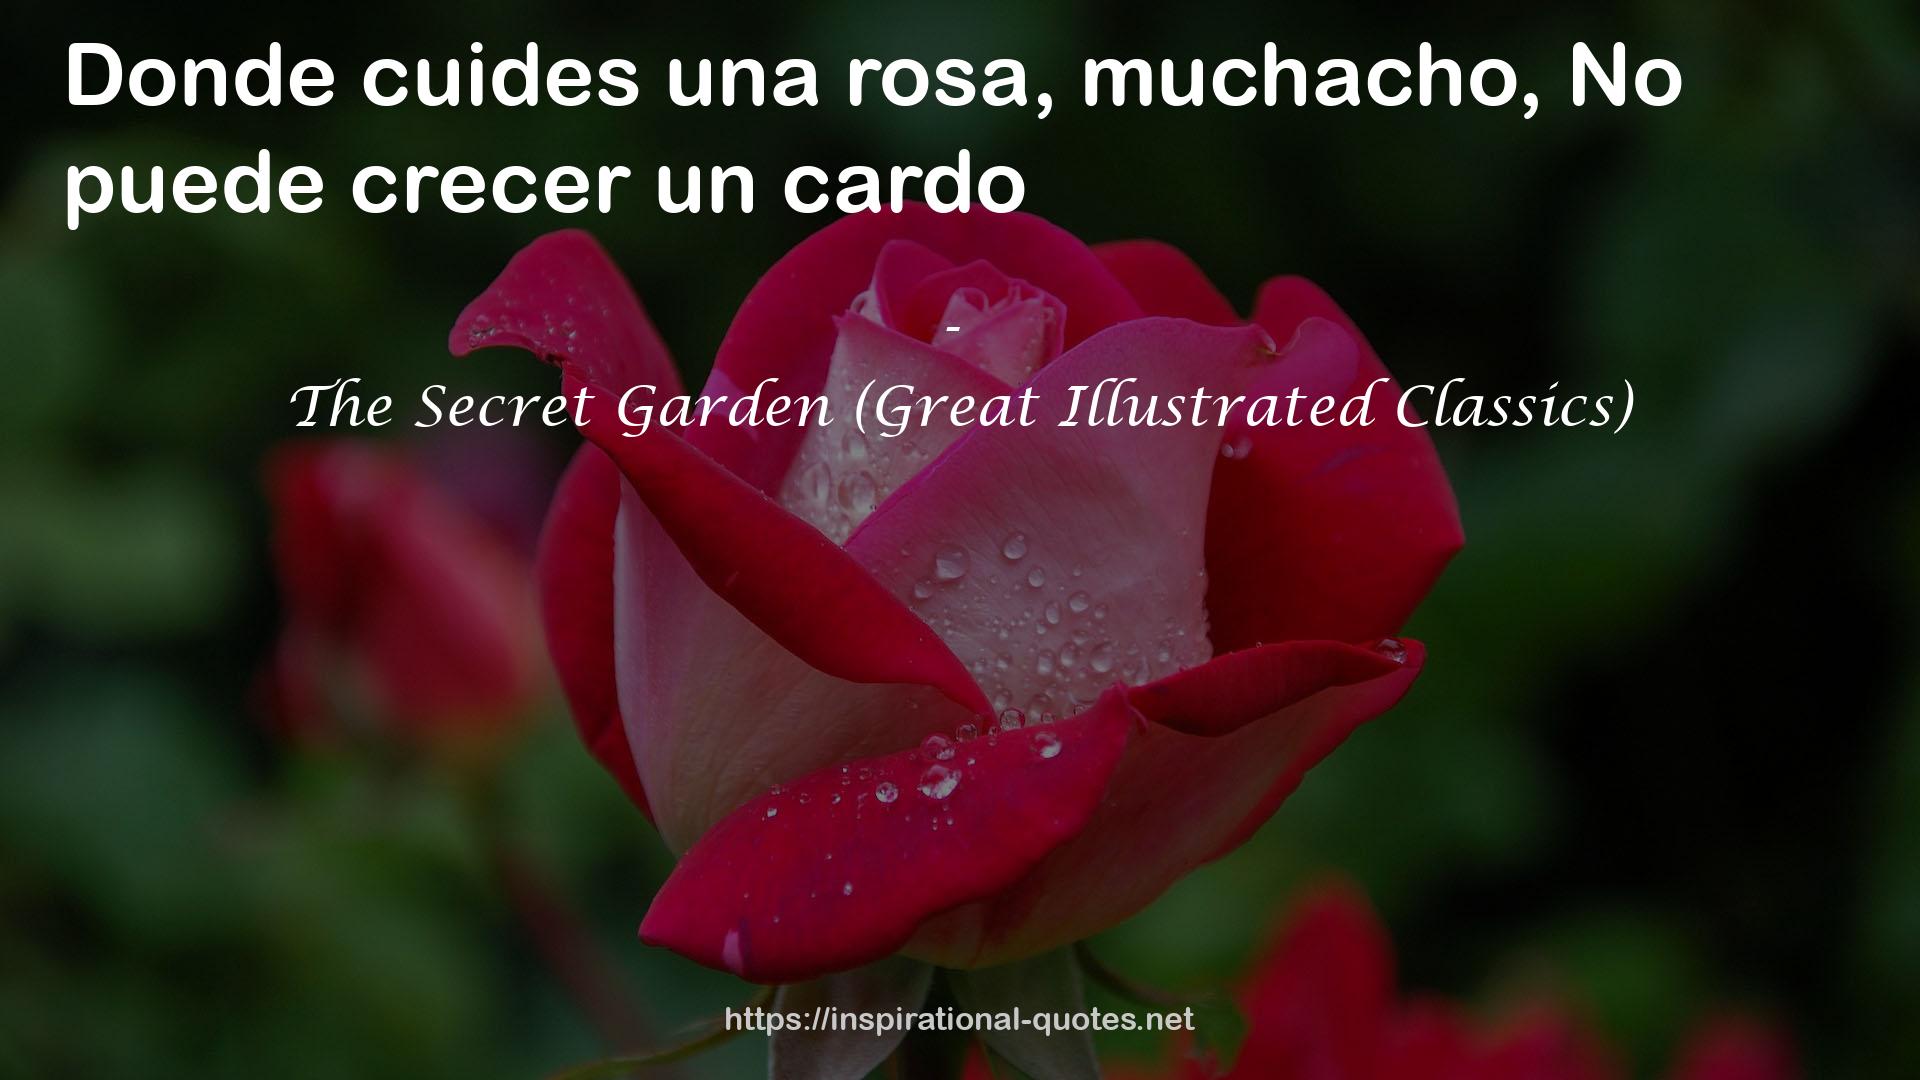 The Secret Garden (Great Illustrated Classics) QUOTES